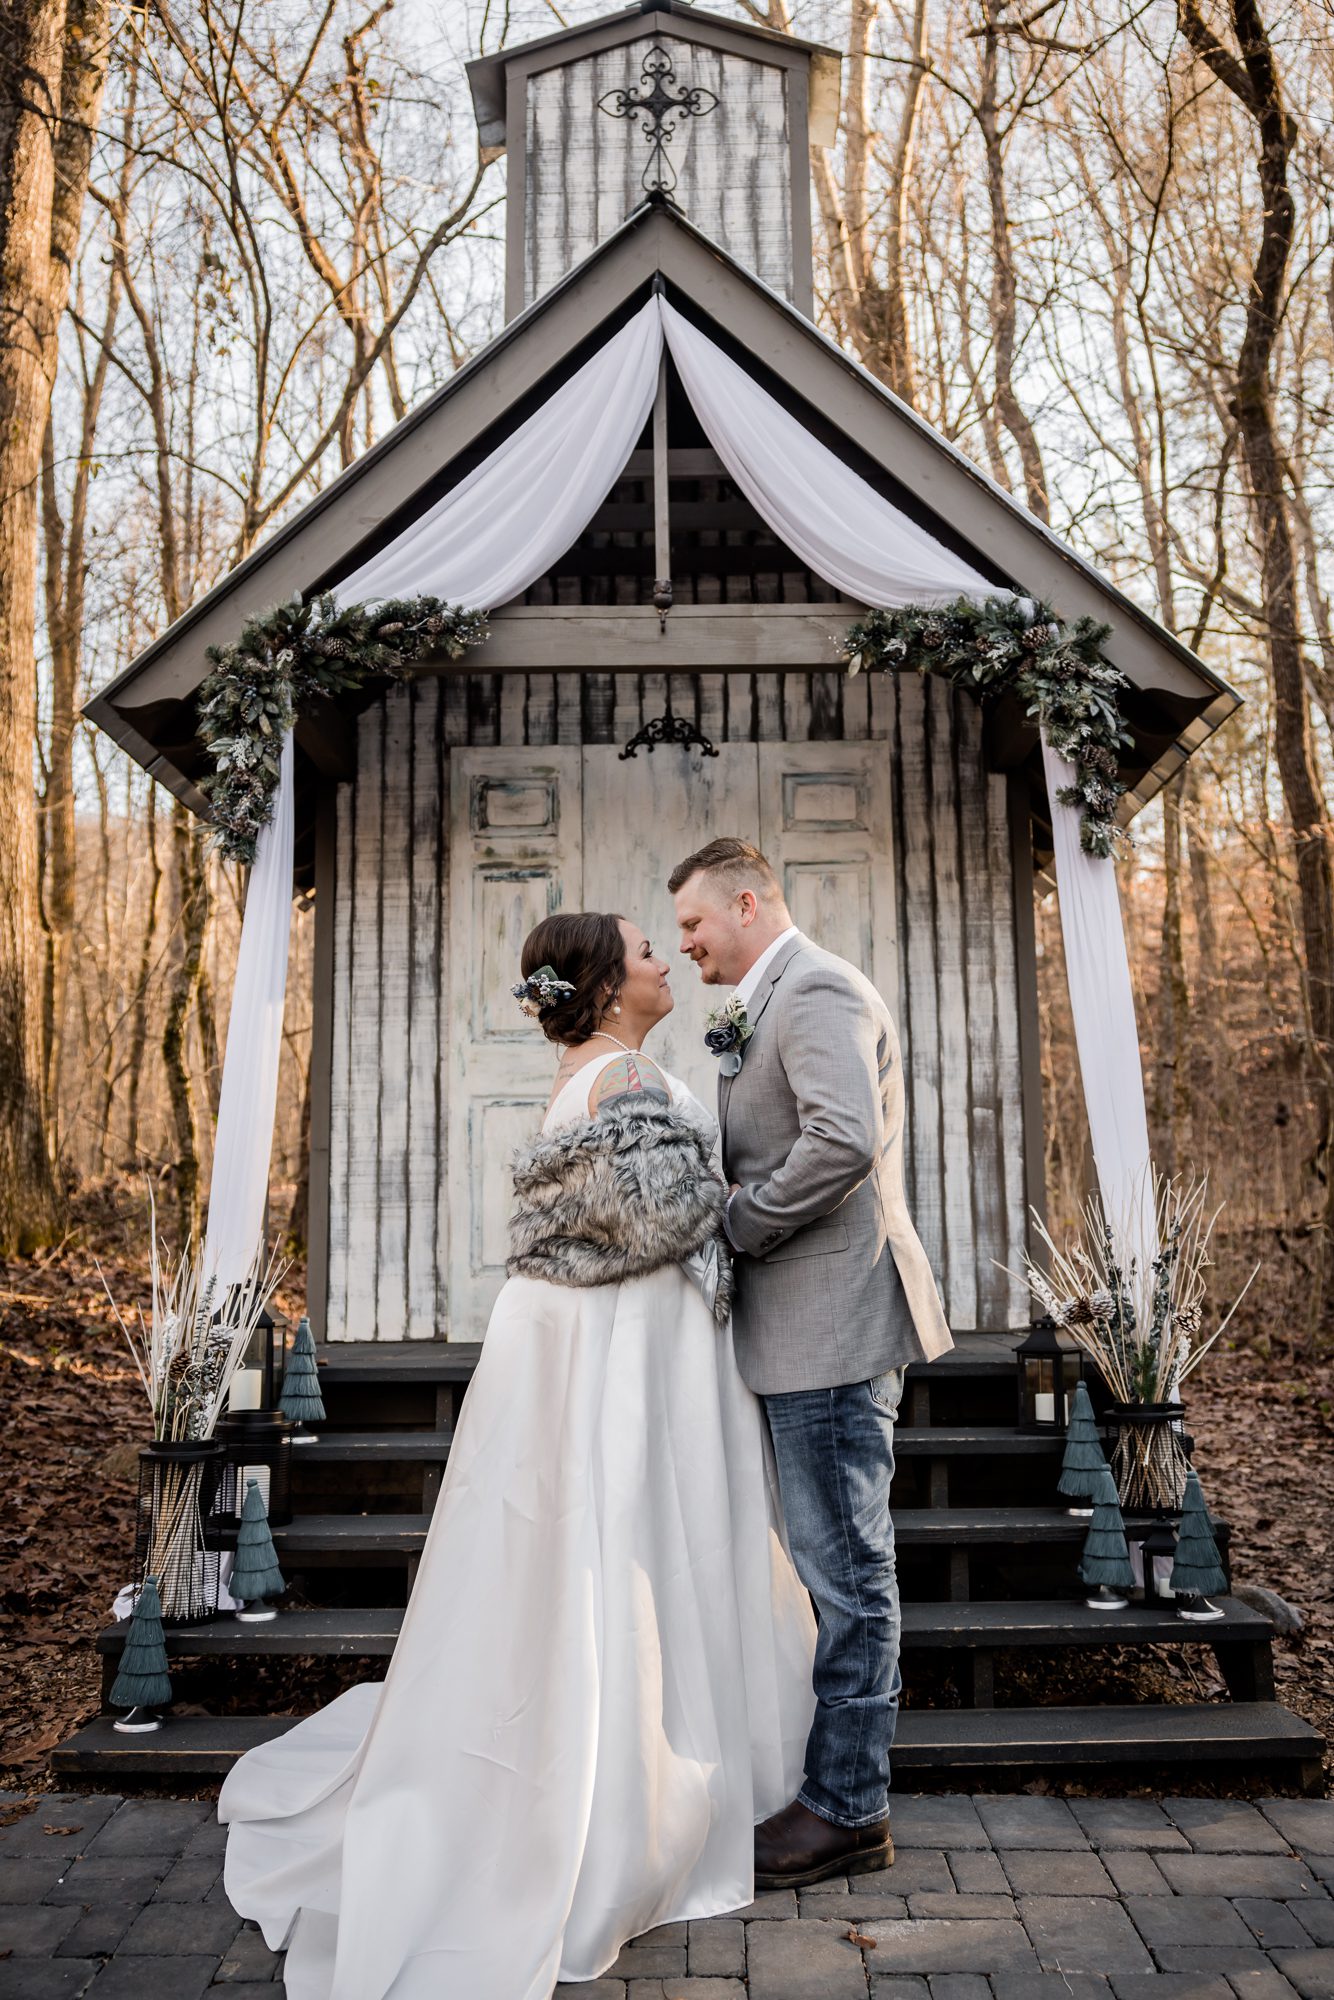 Outdoor Bride and Groom Ceremony